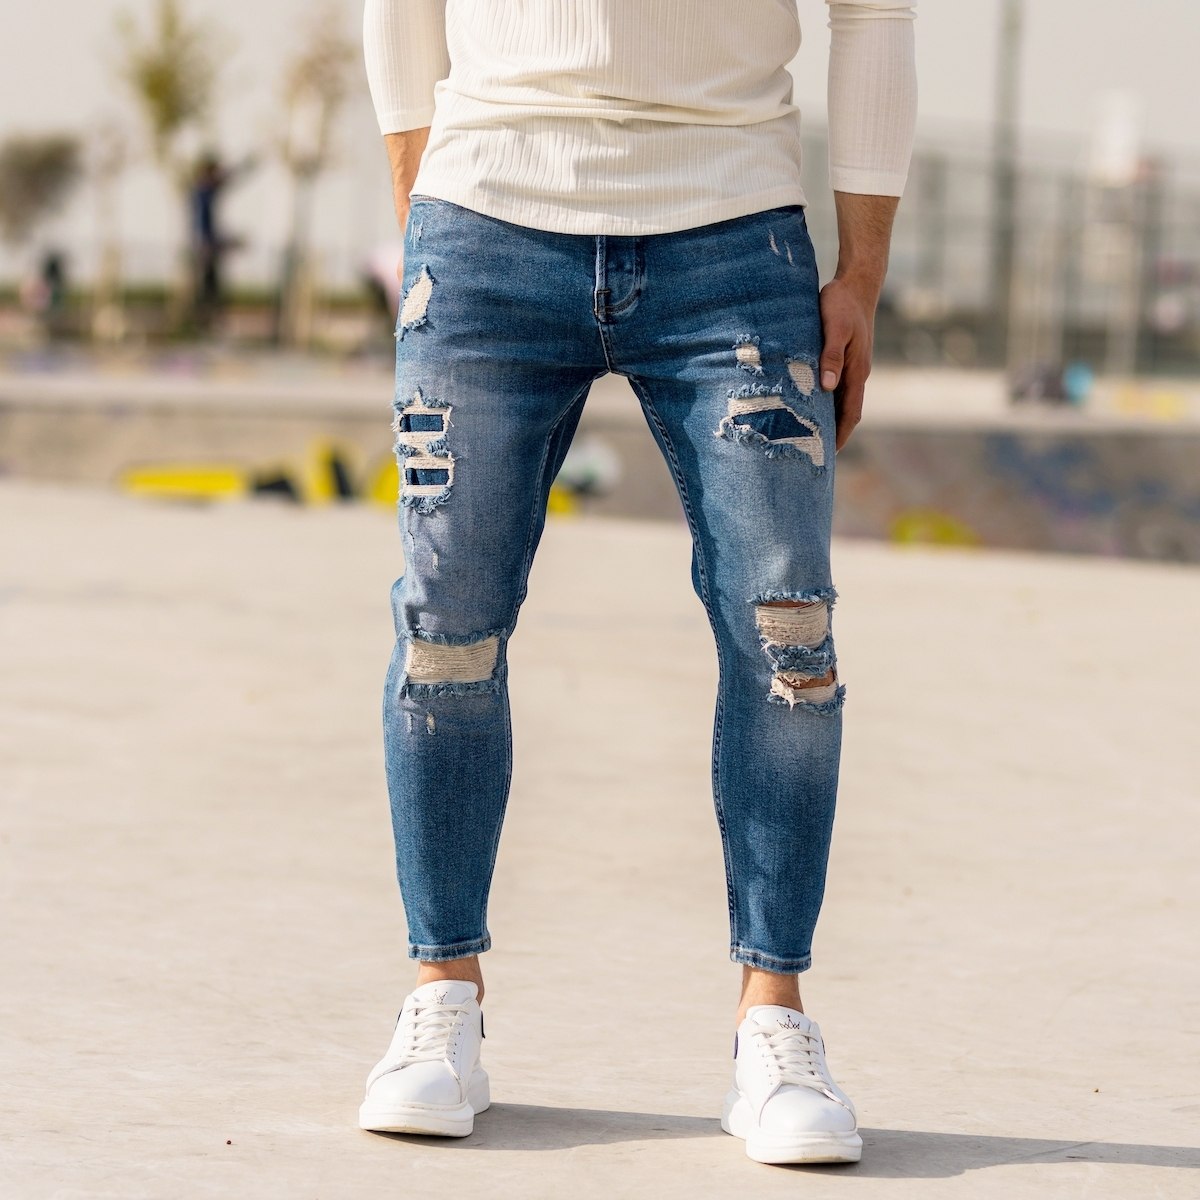 Herren Distressed Jeans mit Flick in dunkelblau - 4